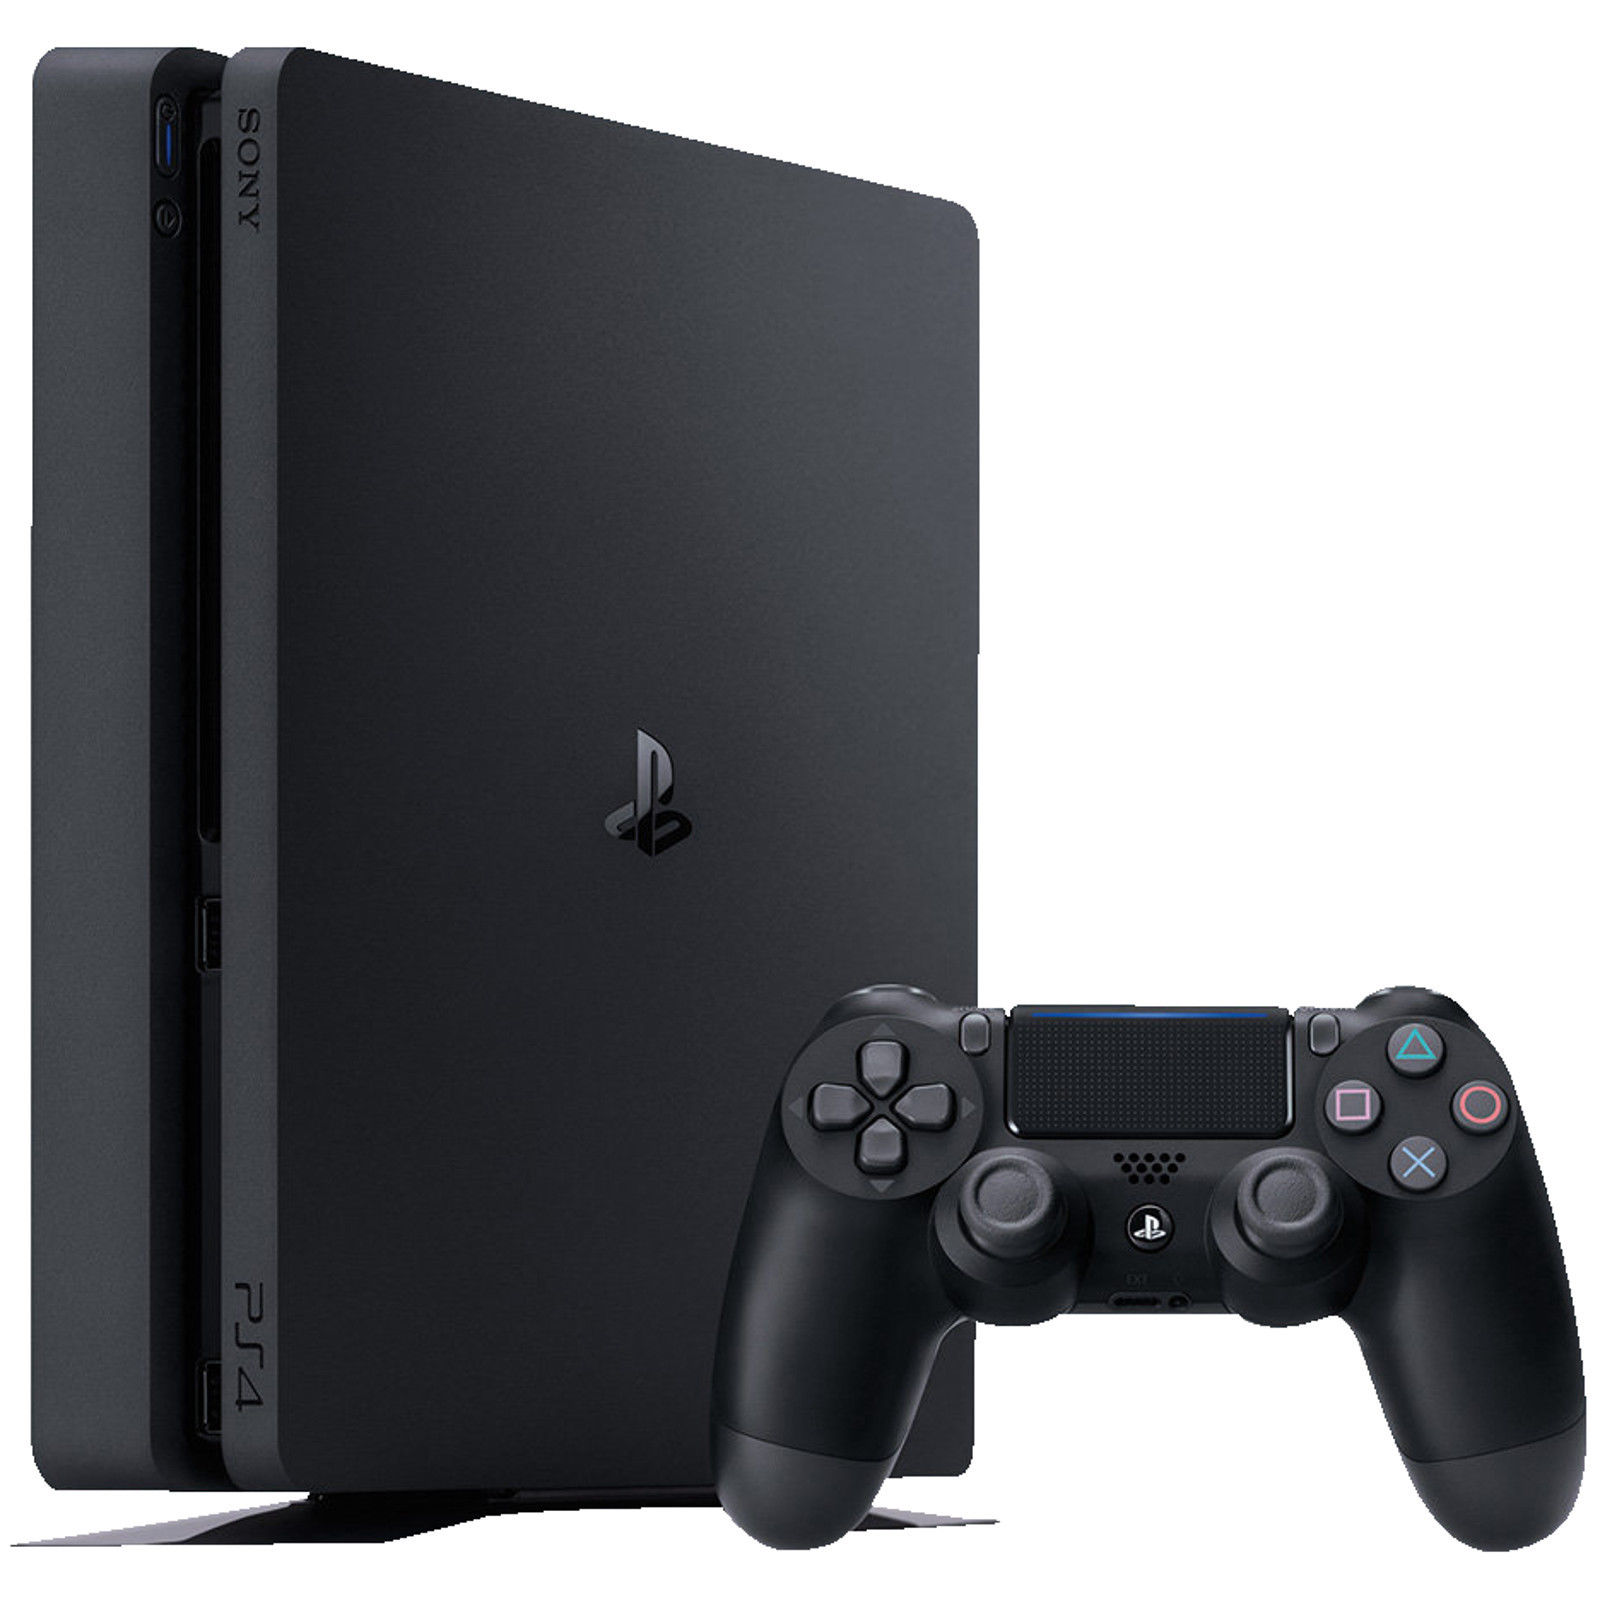 Bild zu Sony Playstation 4 Slim (500 GB) für 269€